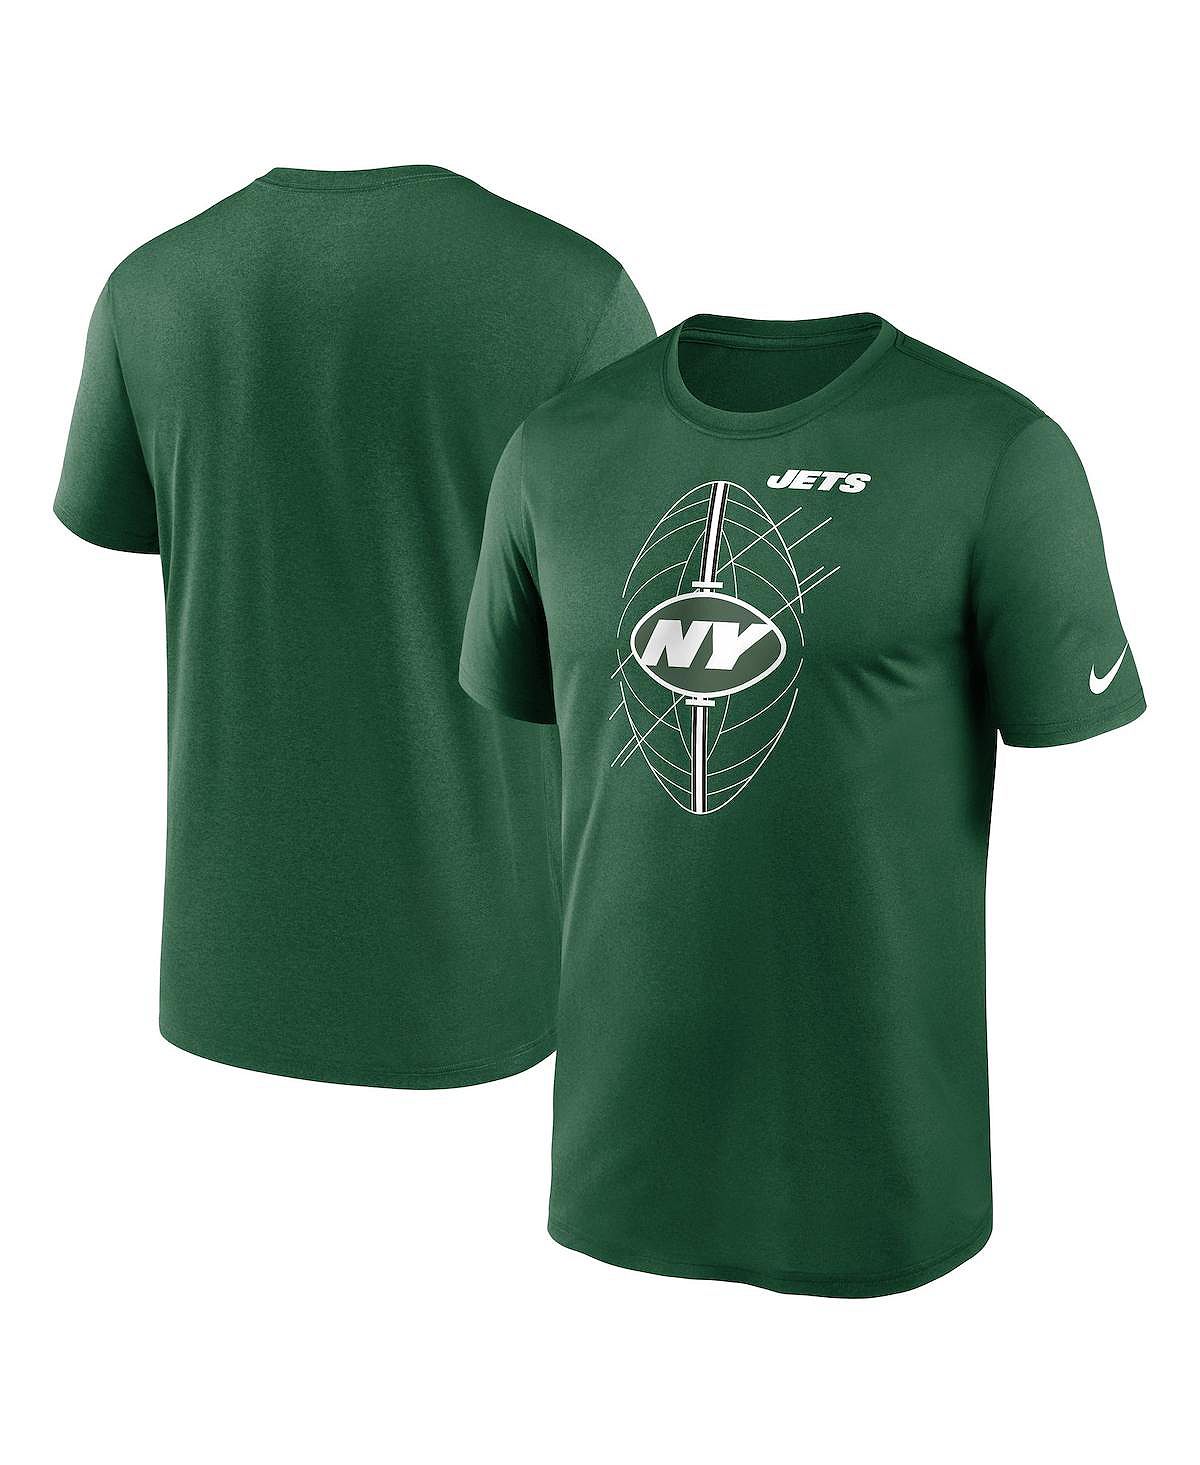 Мужская зеленая футболка New York Jets Legend Icon Performance Nike футболка new york hardcore cross heathergray s 3xl nyhc agnostic front madball мужская хлопковая футболка с принтом футболка